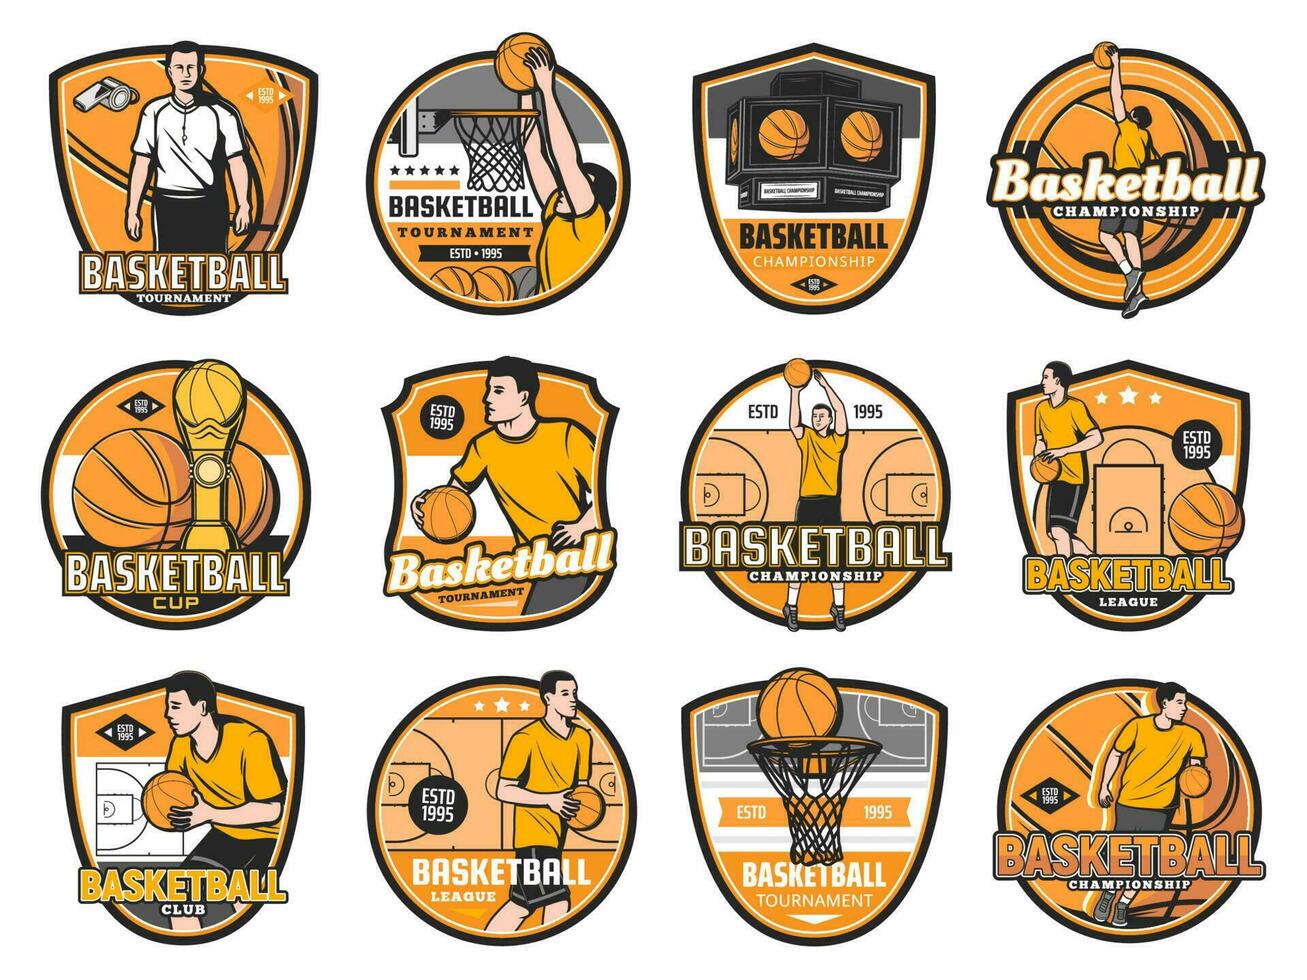 Basketball tournament, championship, club emblems vector